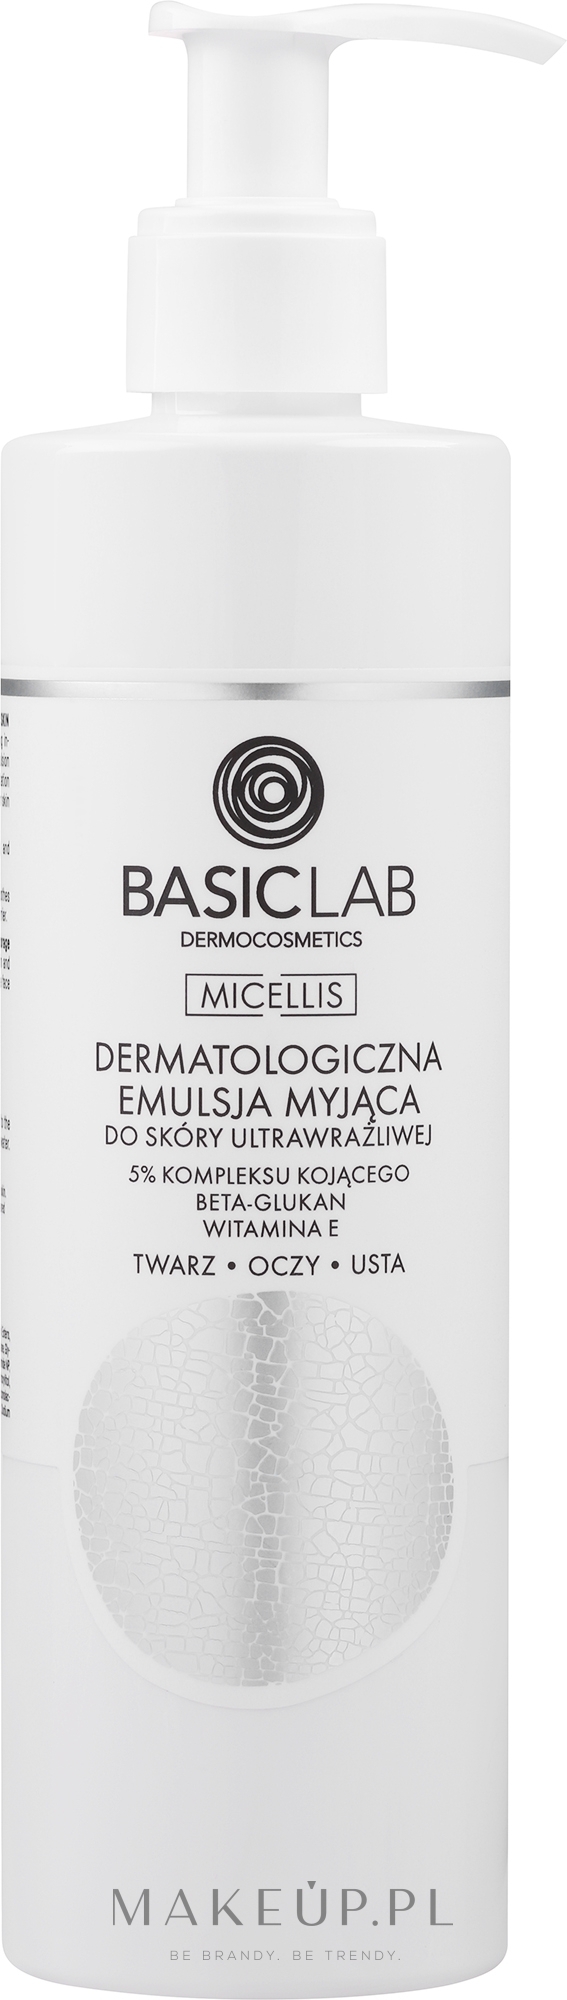 Dermatologiczna emulsja myjąca do skóry ultrawrażliwej - BasicLab Dermocosmetics Micellis Dermatological Puryfying Emulsion For Ultra Sensitive Skin  — Zdjęcie 300 ml